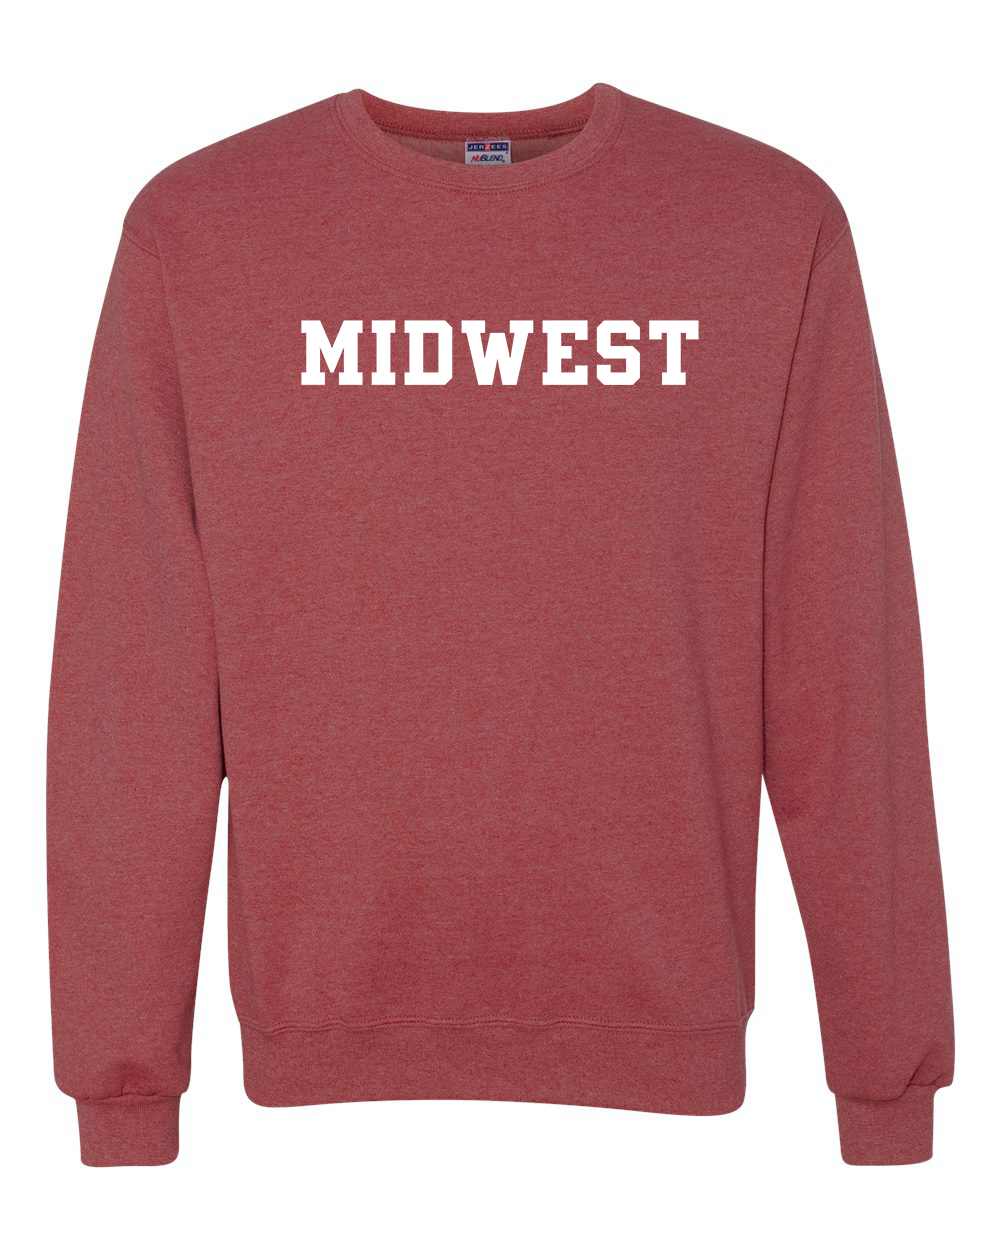 Midwest Crew Sweatshirt